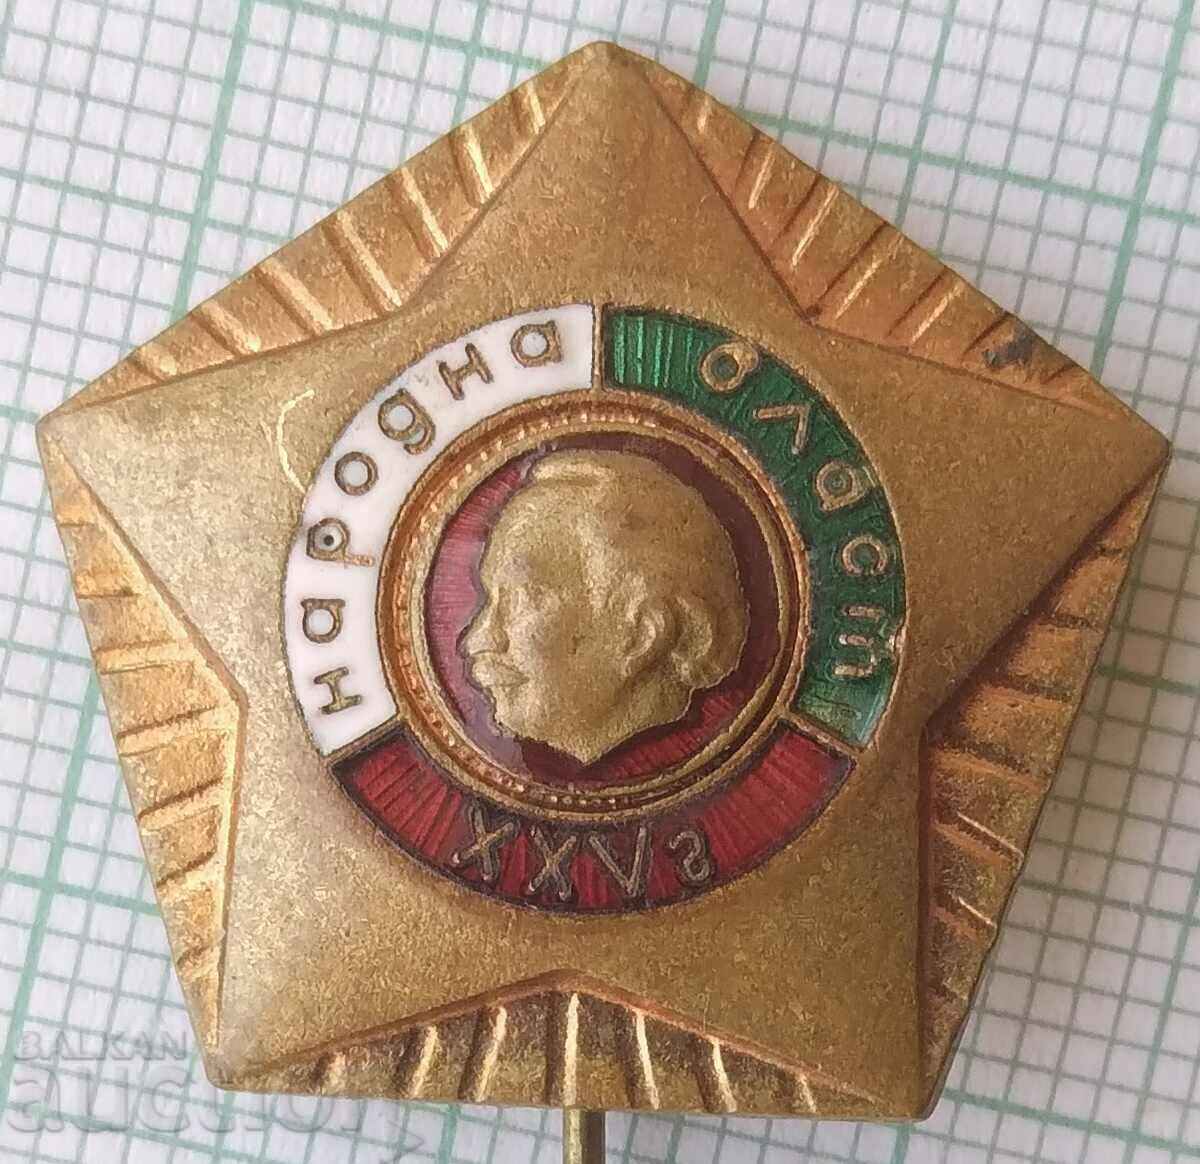 13907 Badge - 25 years People's Power 1944-1969 - bronze enamel